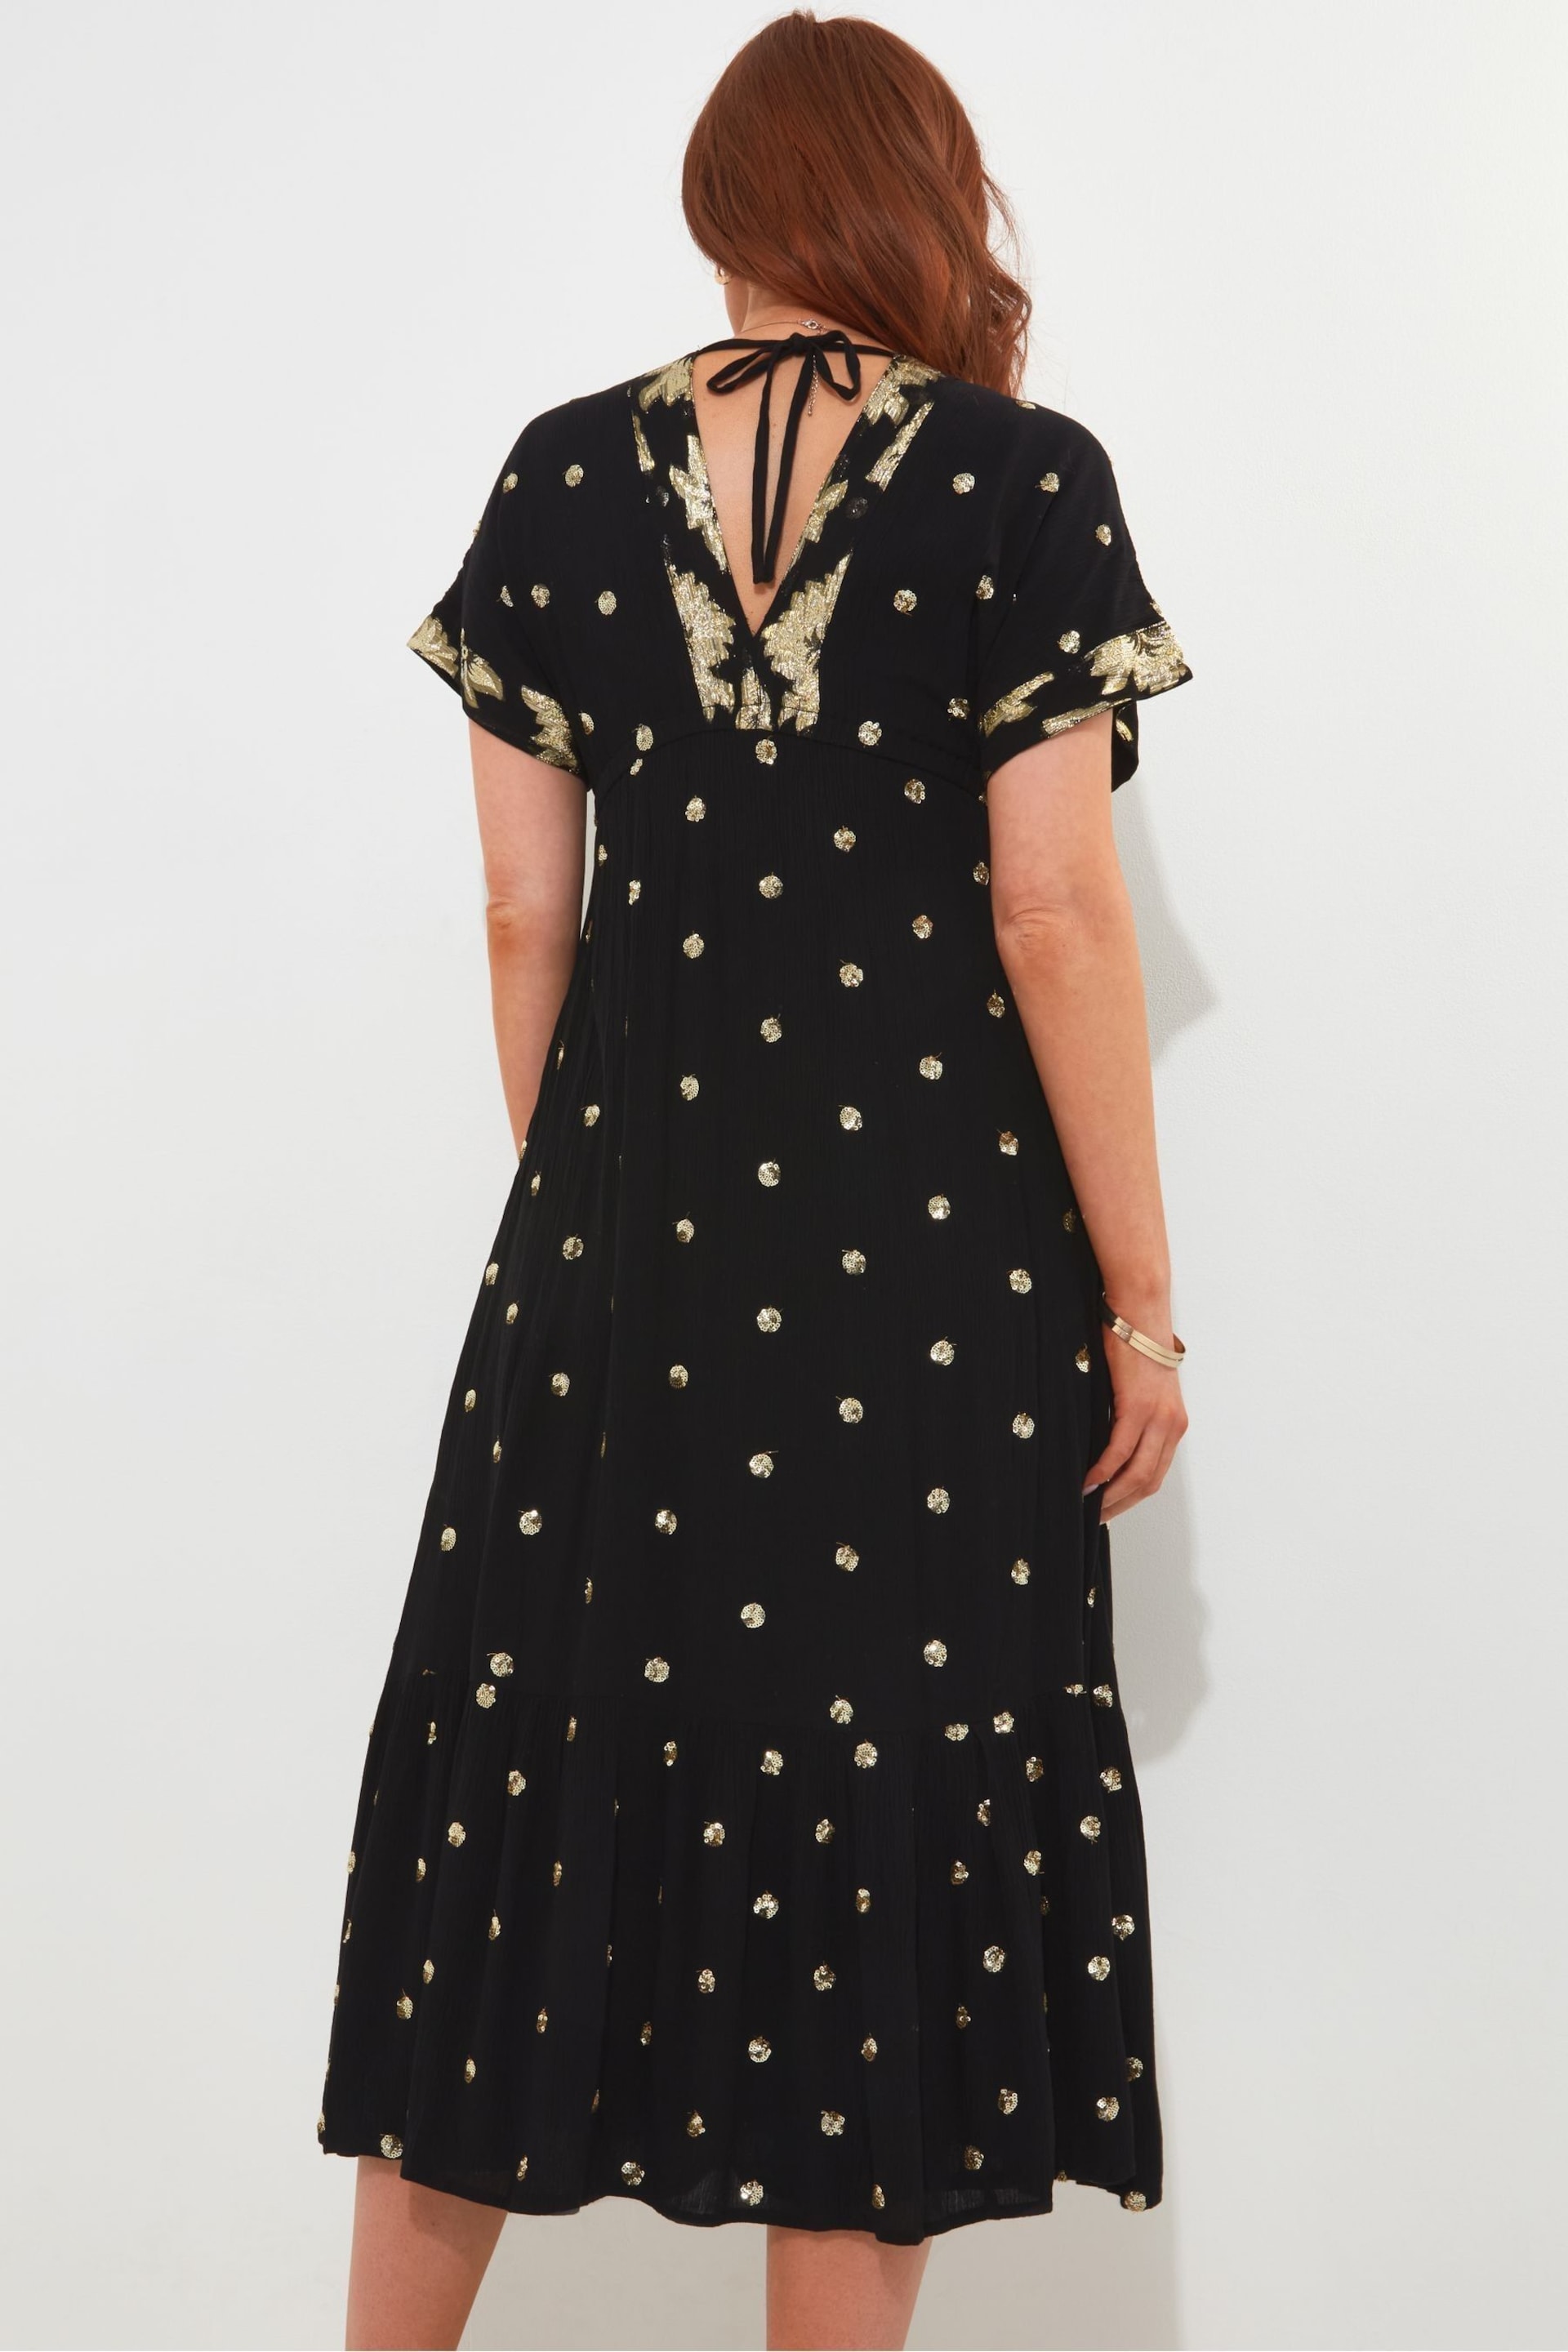 Joe Browns Dark Black Sparkle Sequin Dot Tiered Kimono Style Maxi Dress - Image 3 of 7